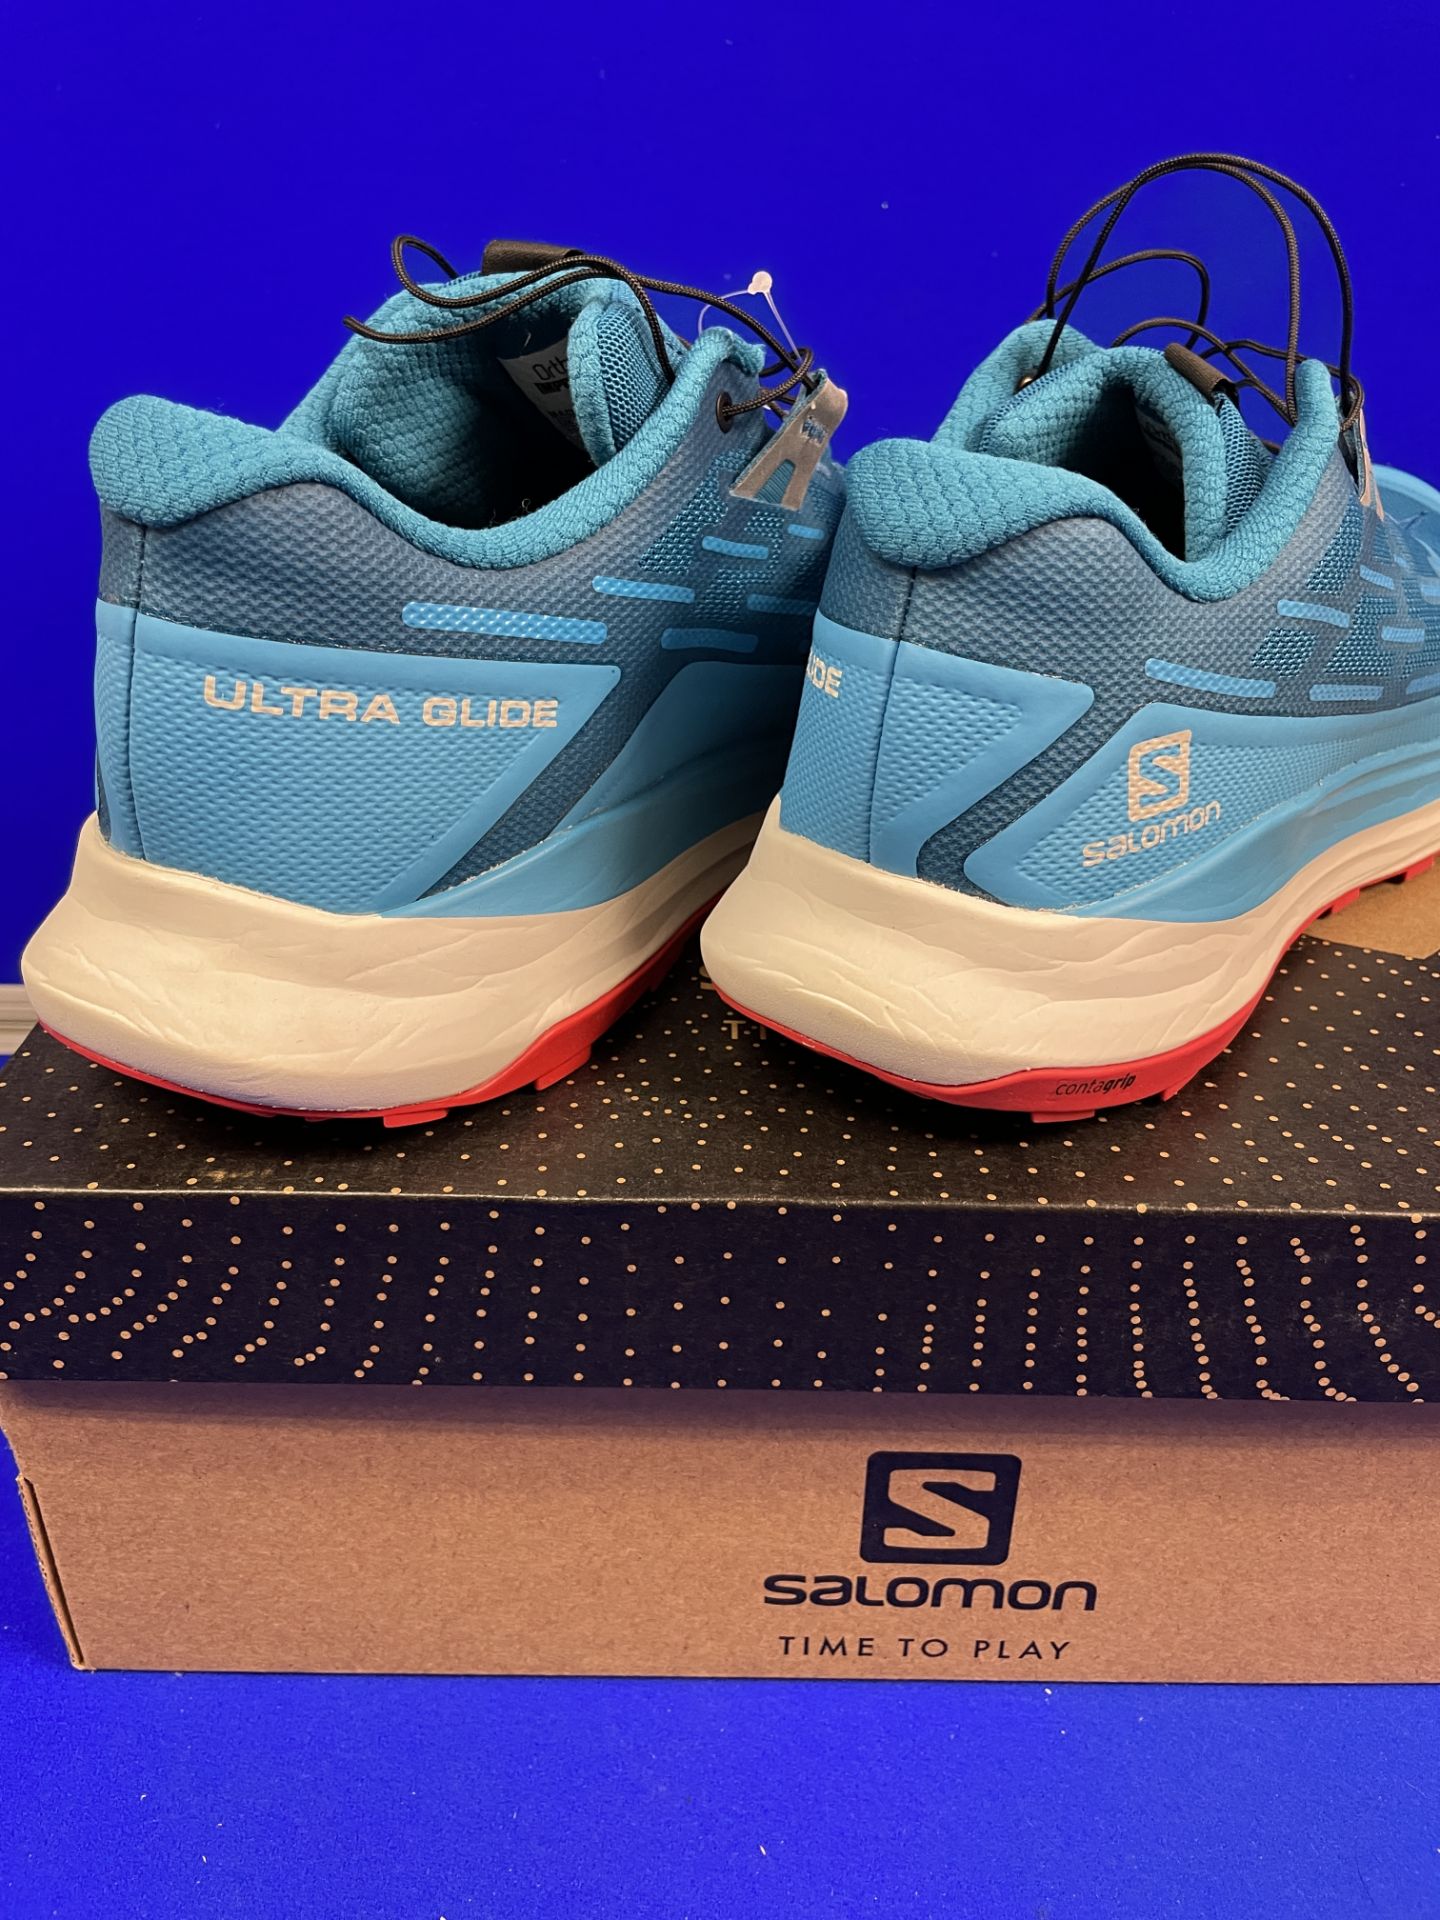 Salomon Ultra Glide Men's Running Shoes | Uk 11.5 - Image 2 of 4